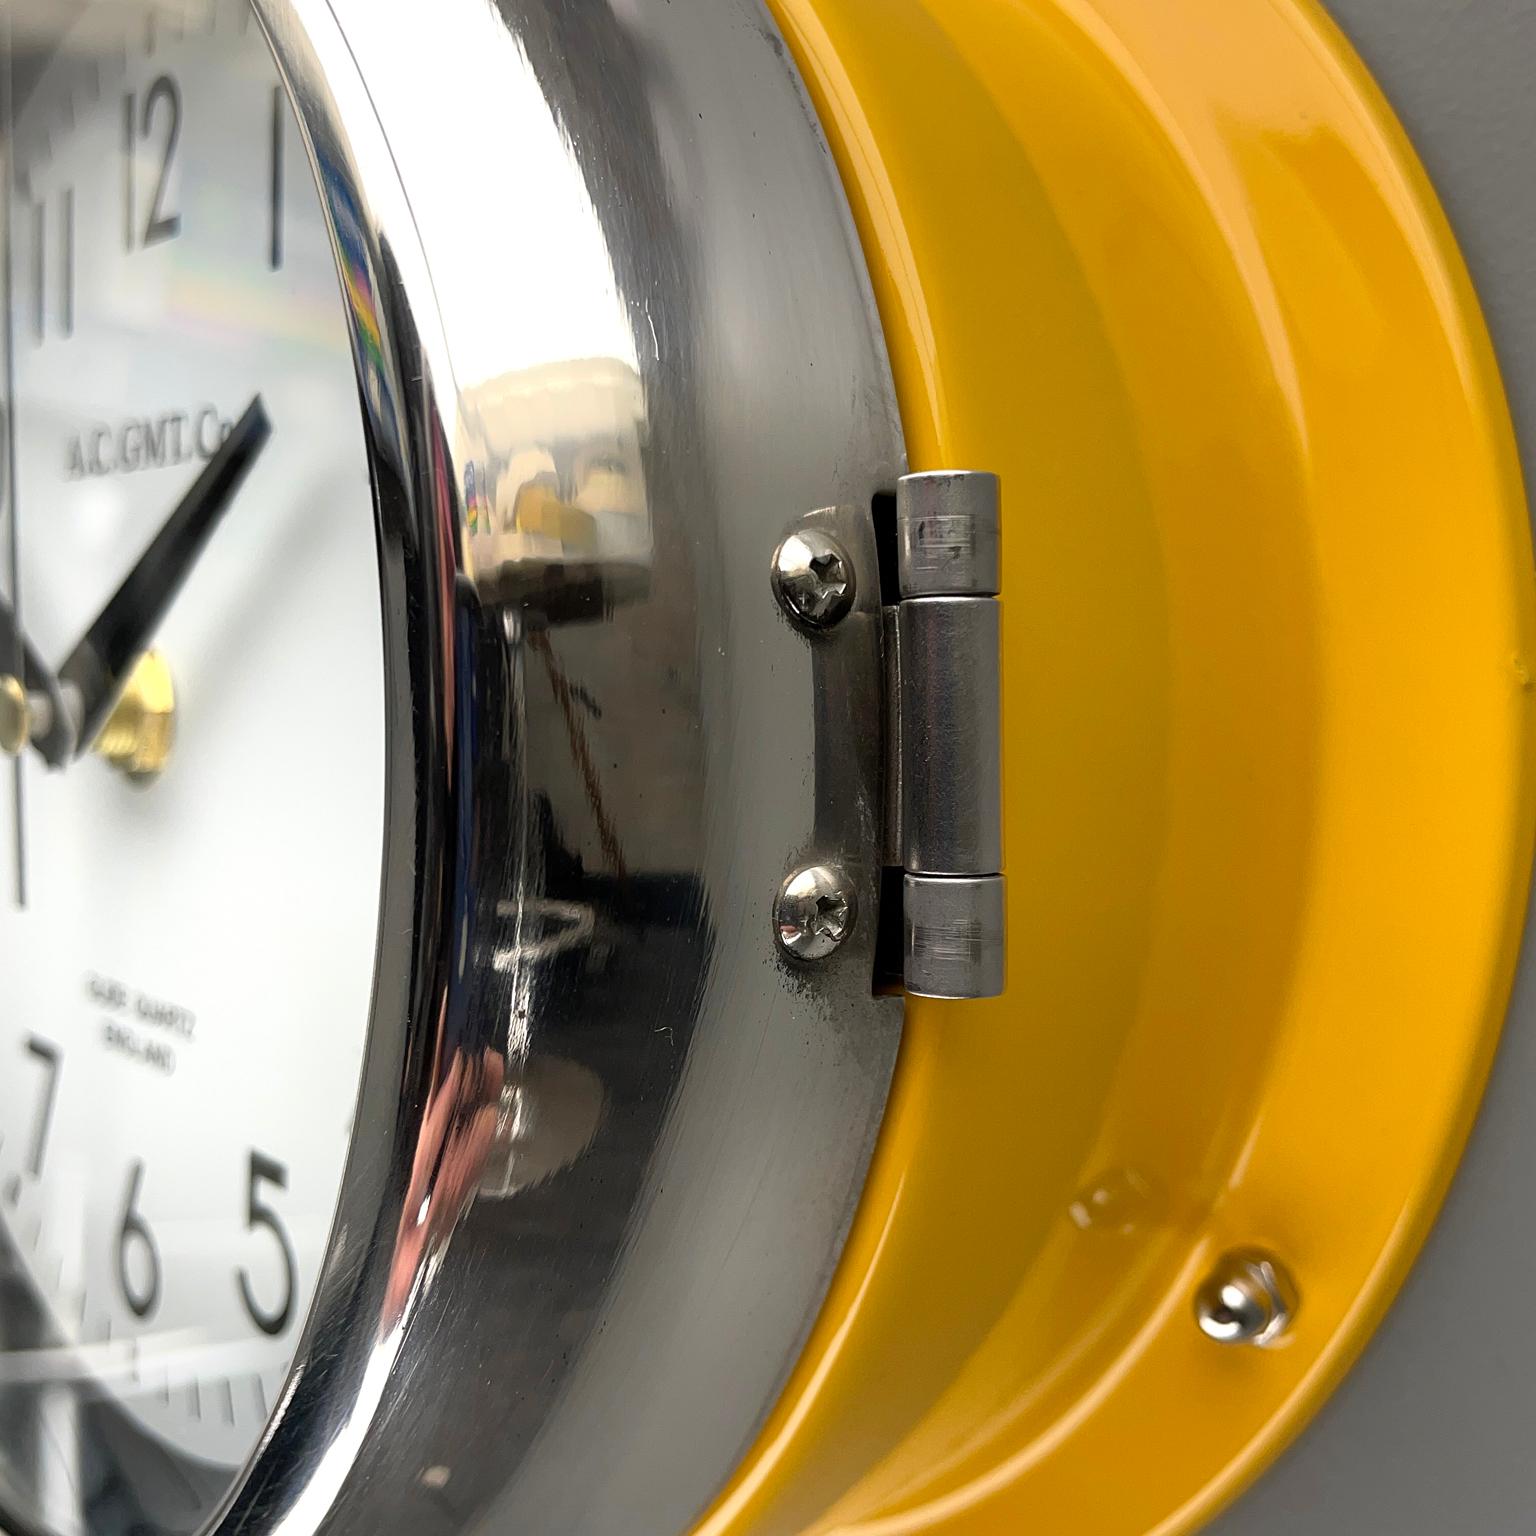 Glazed 1970's British Yellow Illumination & White AC GMT Co. Classic Quartz Wall Clock For Sale